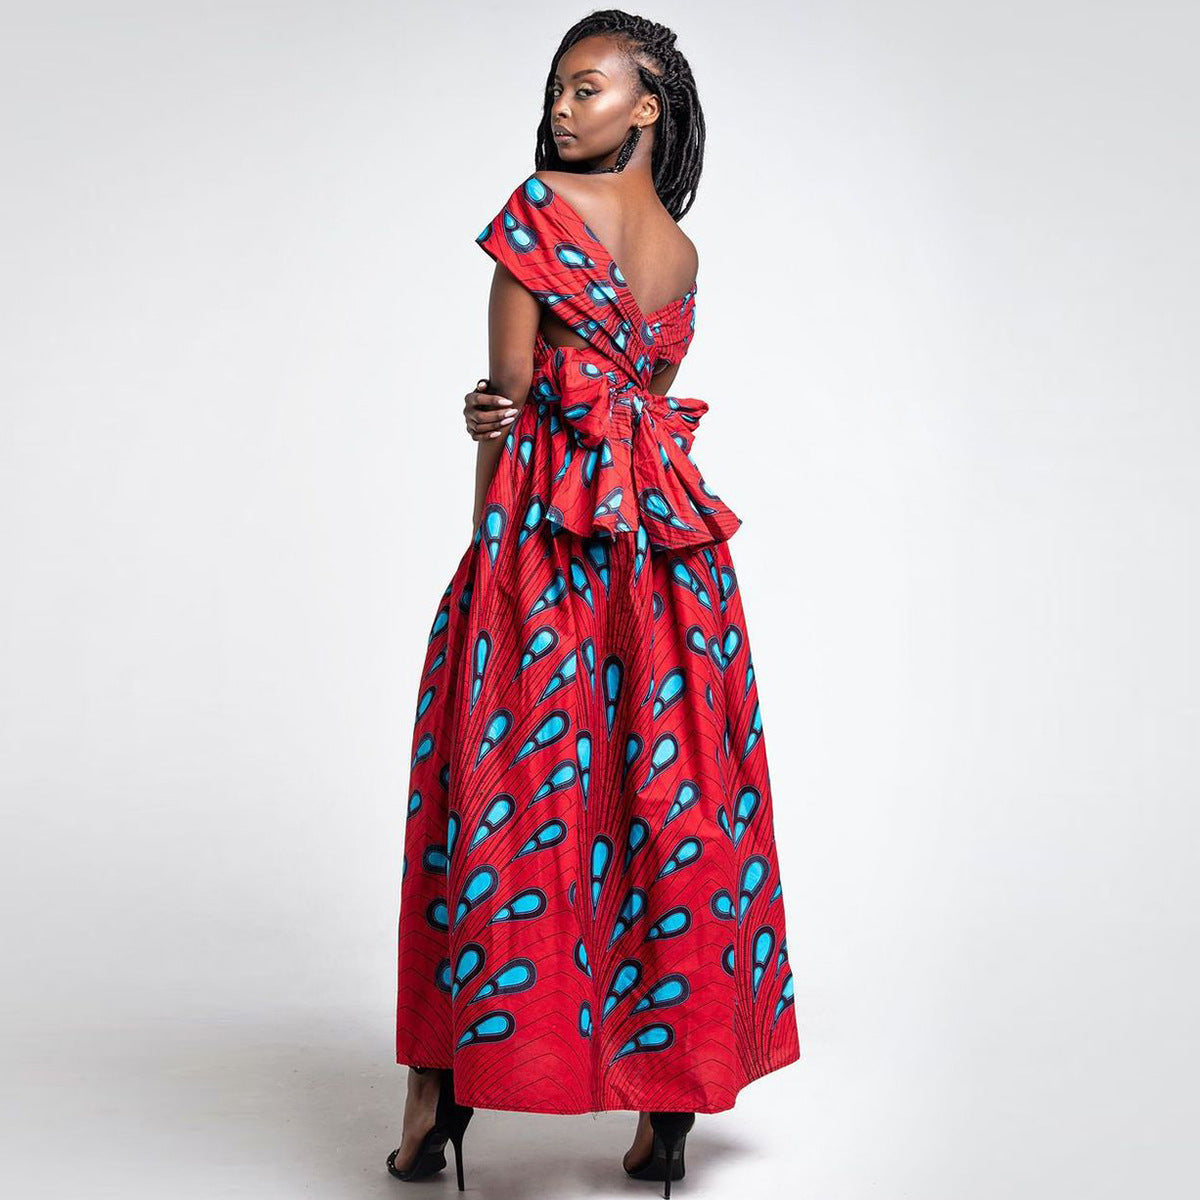 African Girl DIY Sexy Bangdage Women Jumsuits-Women Suits-Free Shipping at meselling99